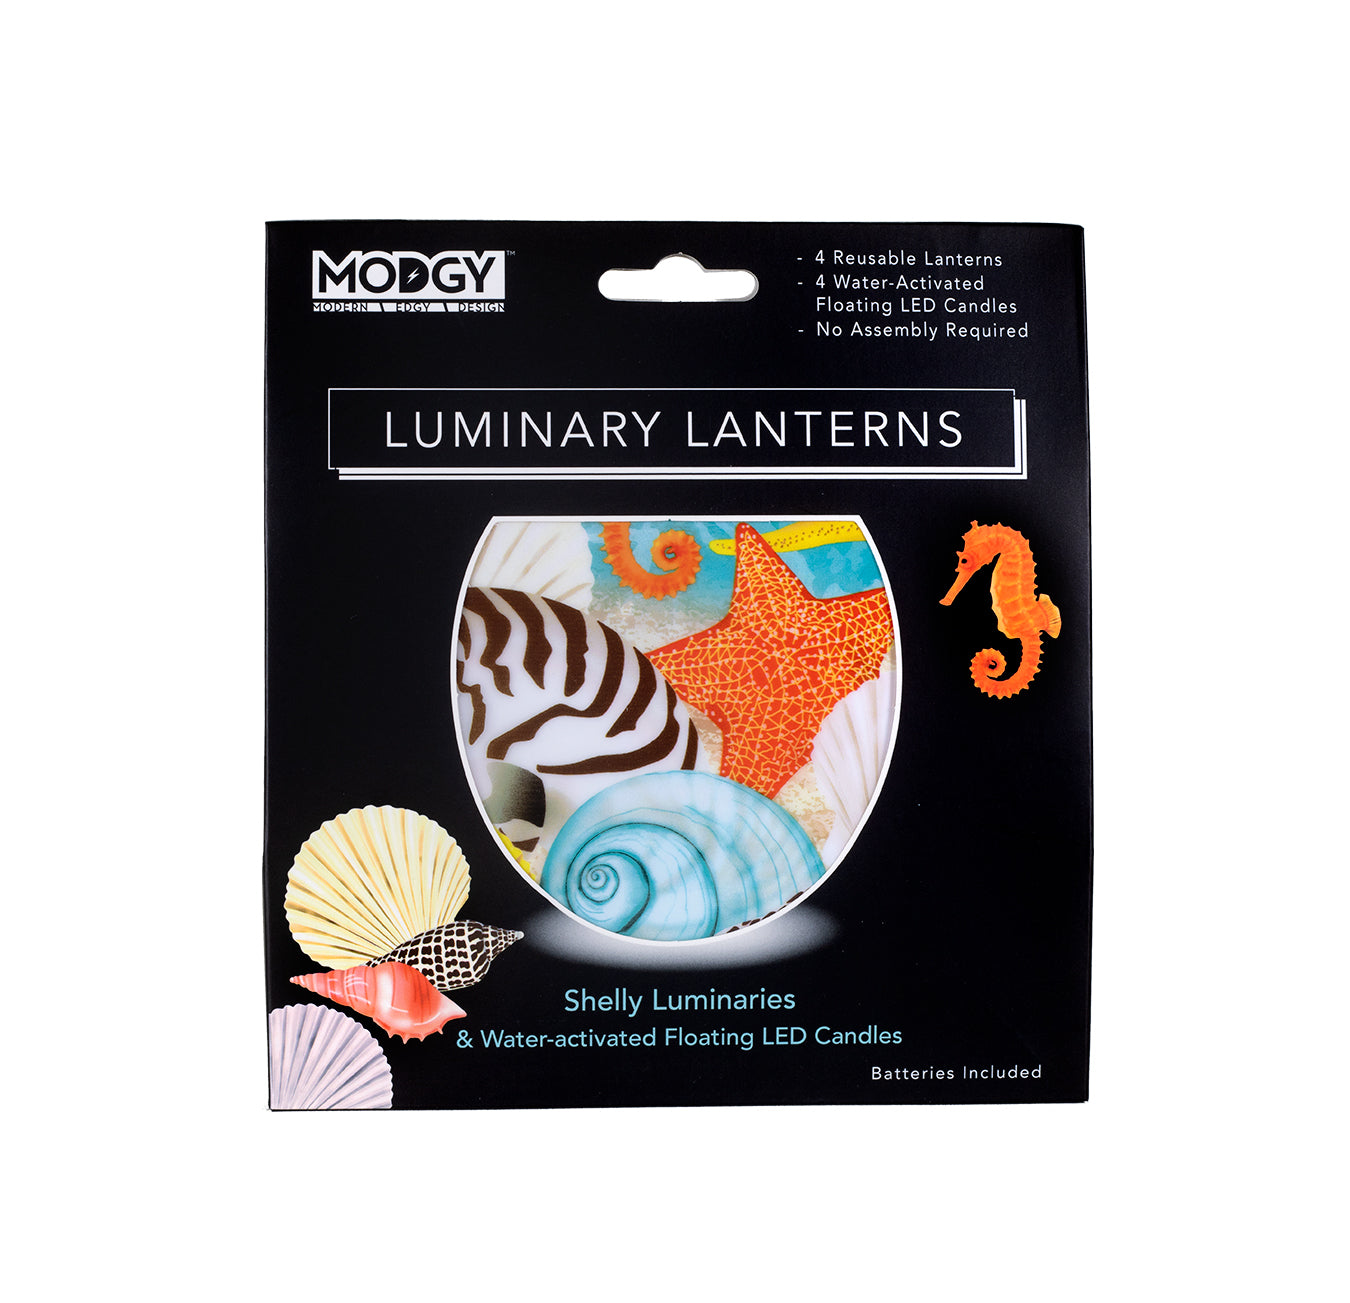 Modgy Luminary Lanterns - Shelly